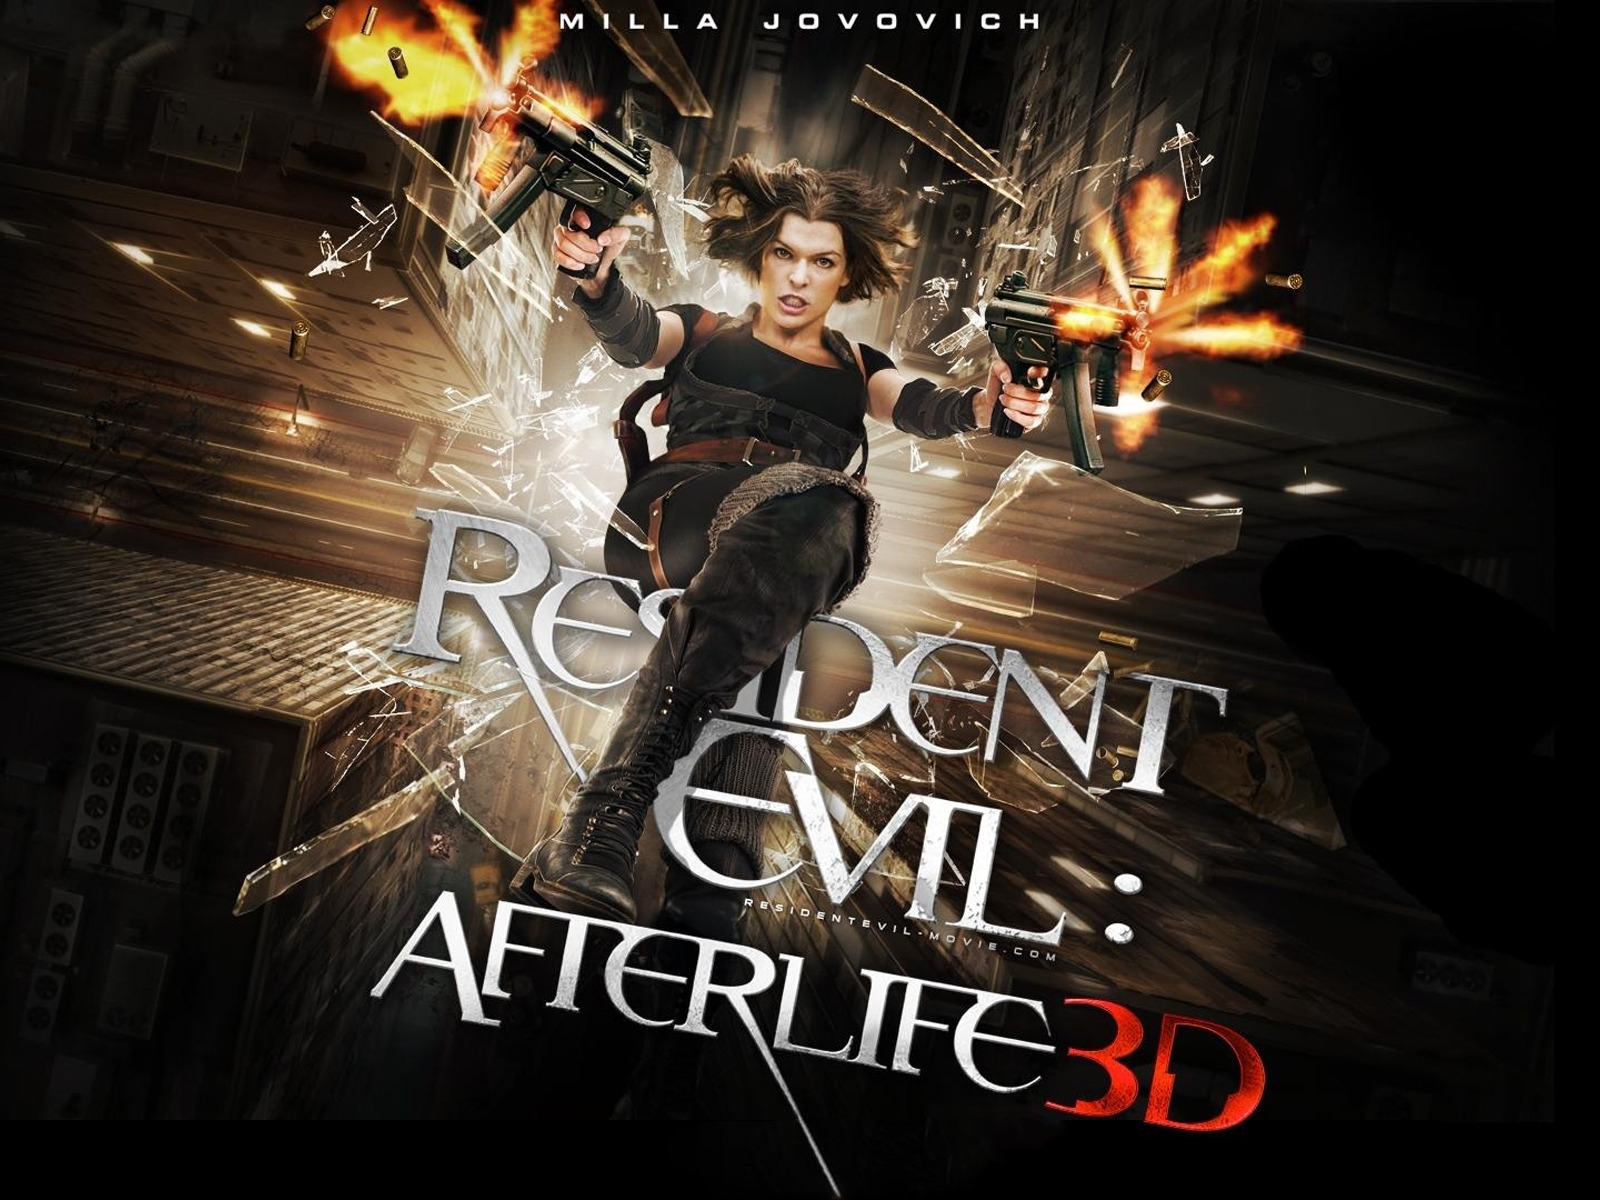 Resident Evil Afterlife 3D Poster for 1600 x 1200 resolution